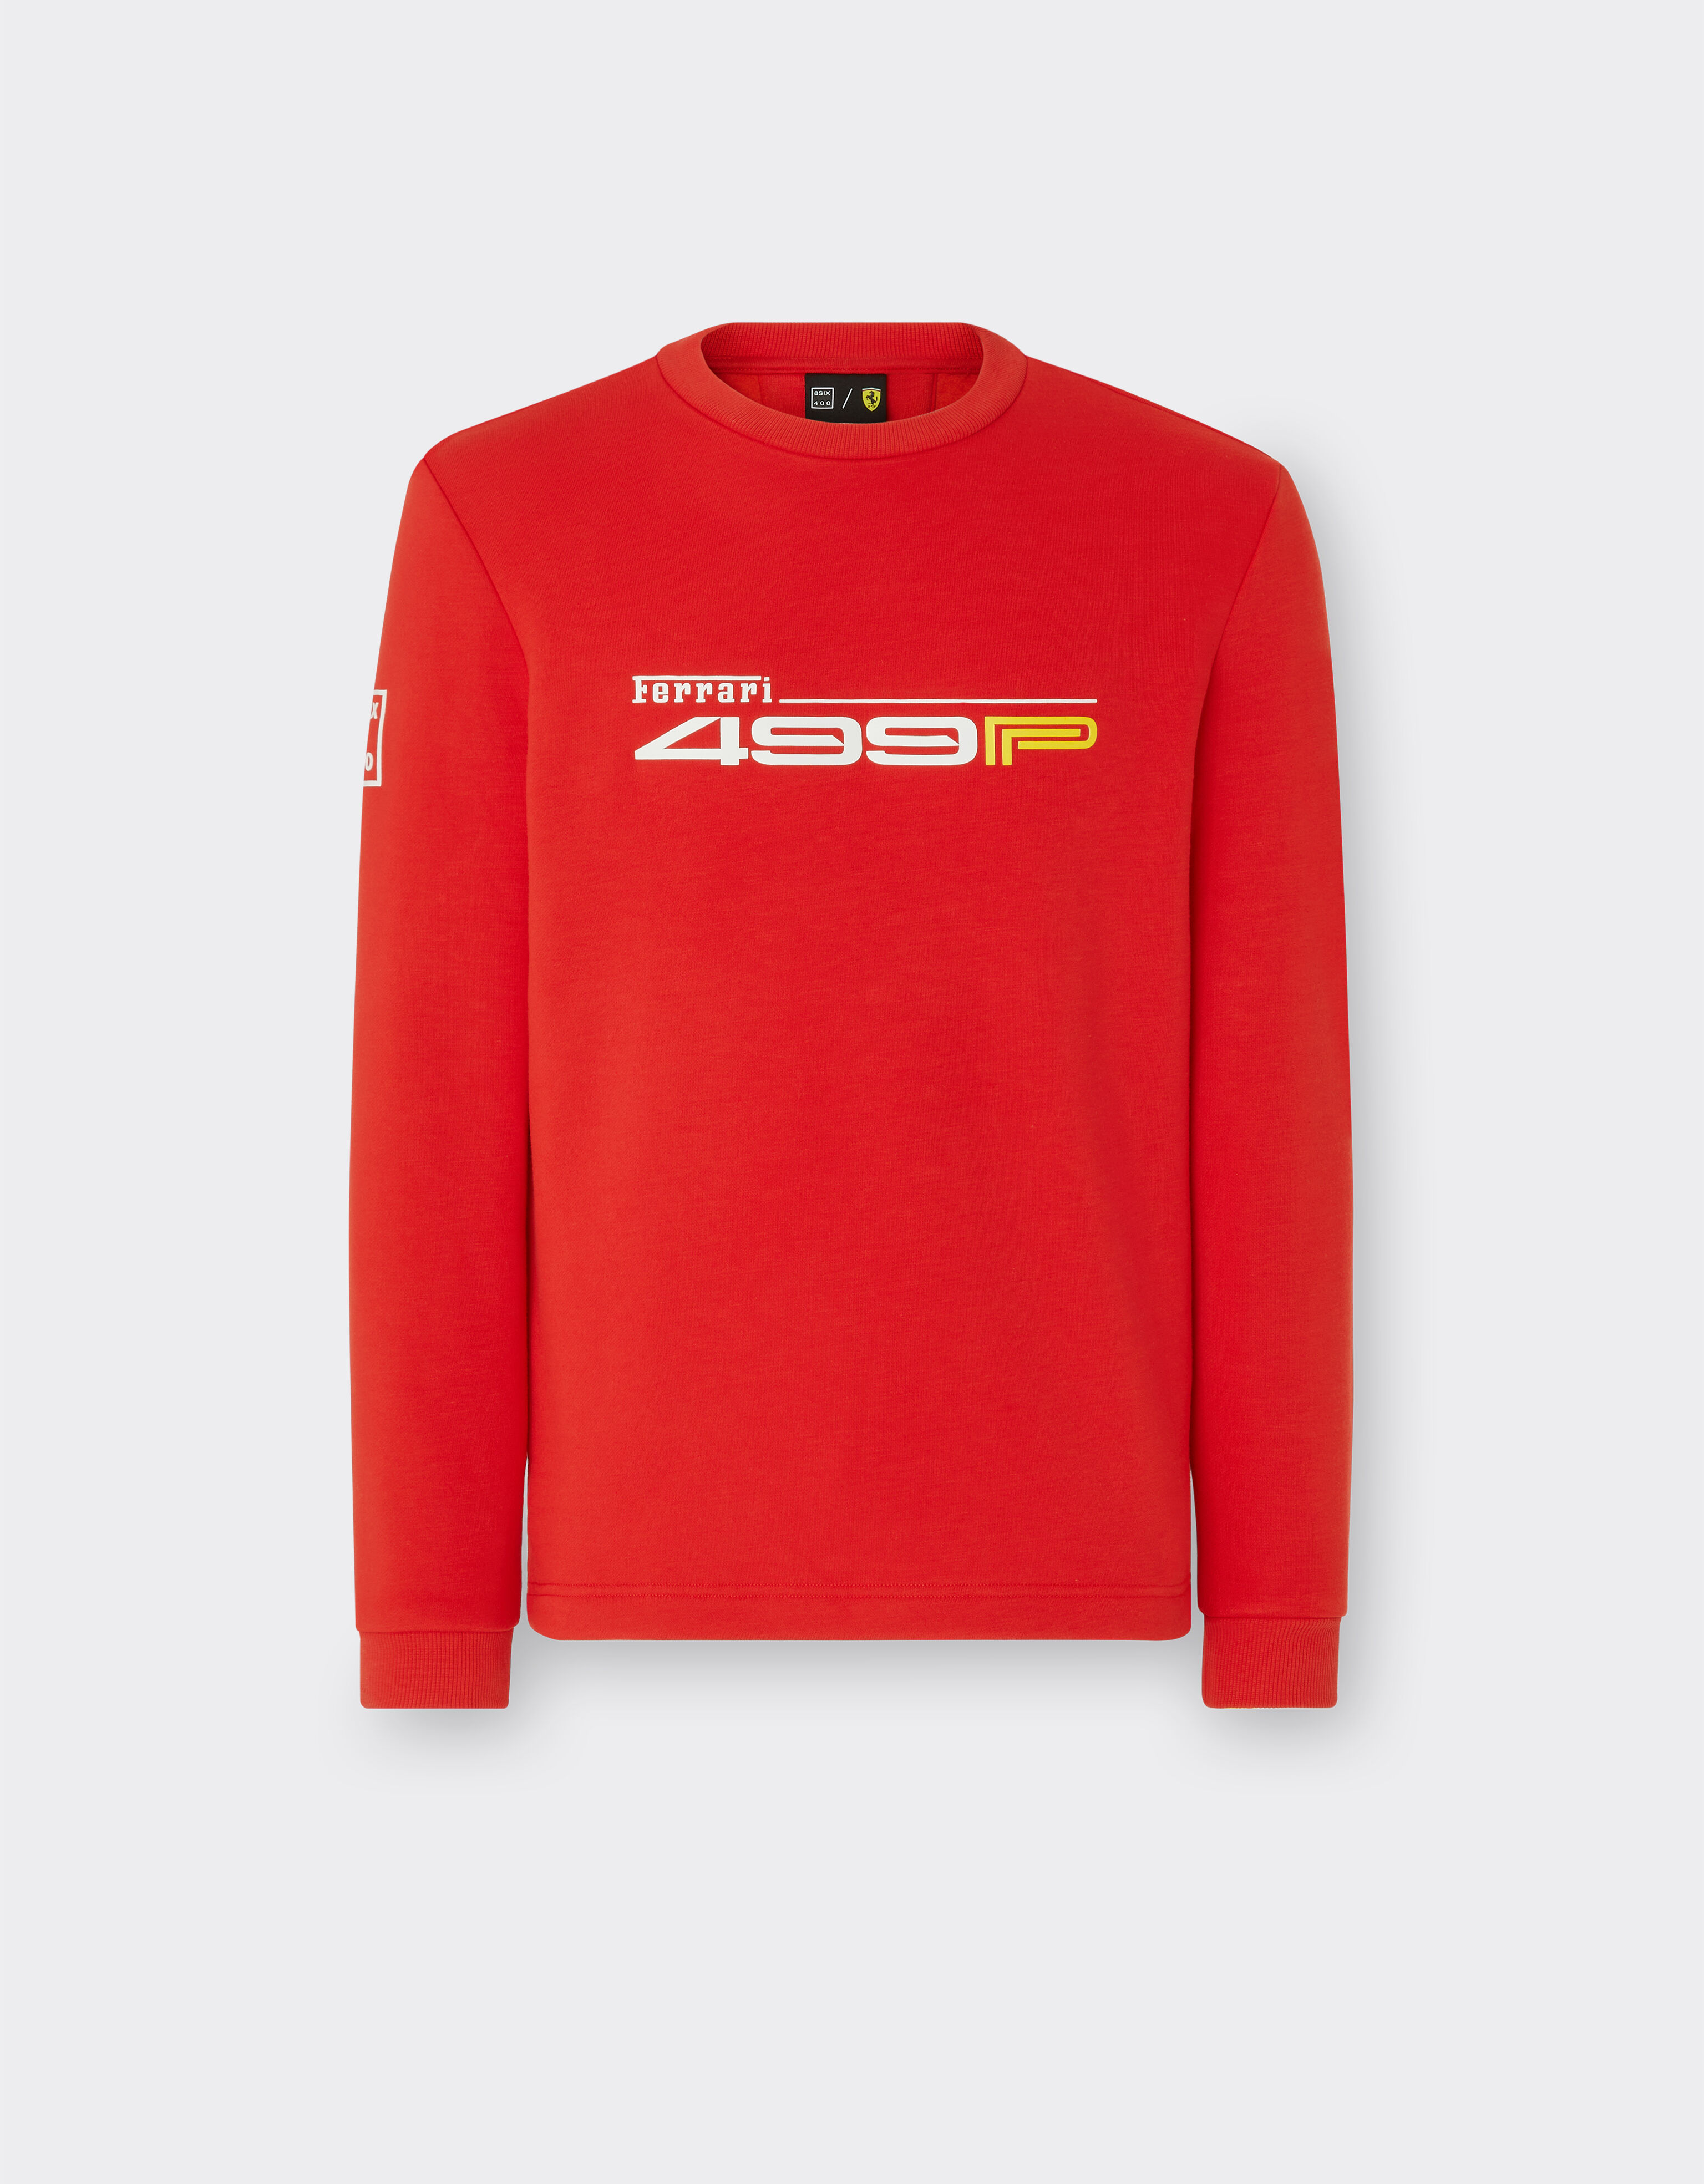 ${brand} Sweat-shirt Ferrari Hypercar 499P ${colorDescription} ${masterID}